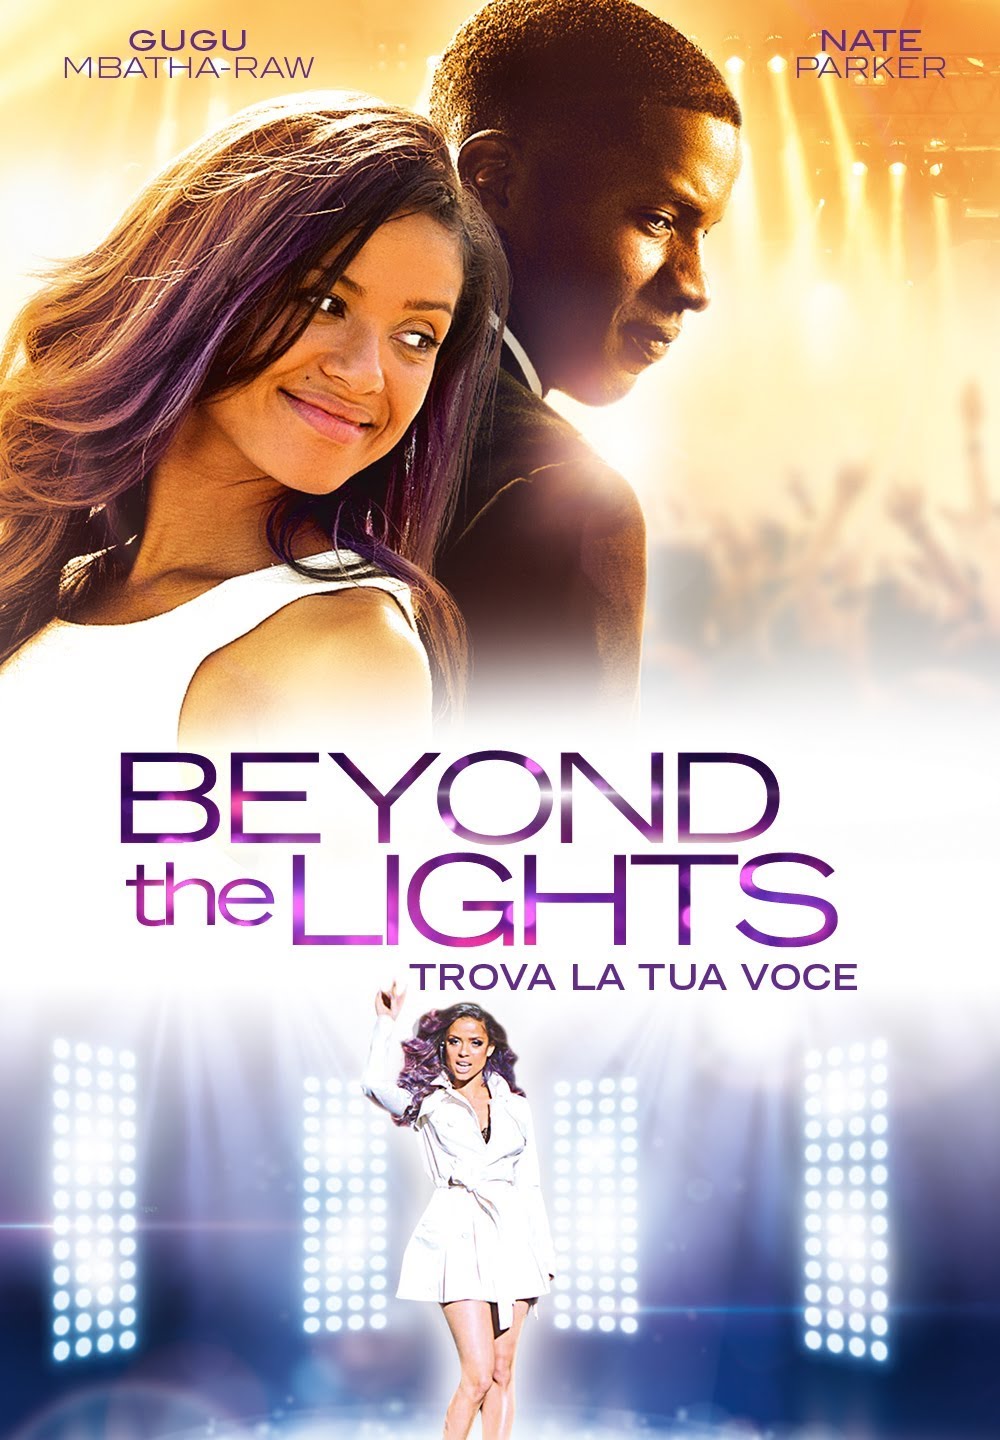 Beyond the Lights – Trova la tua voce [HD] (2014)